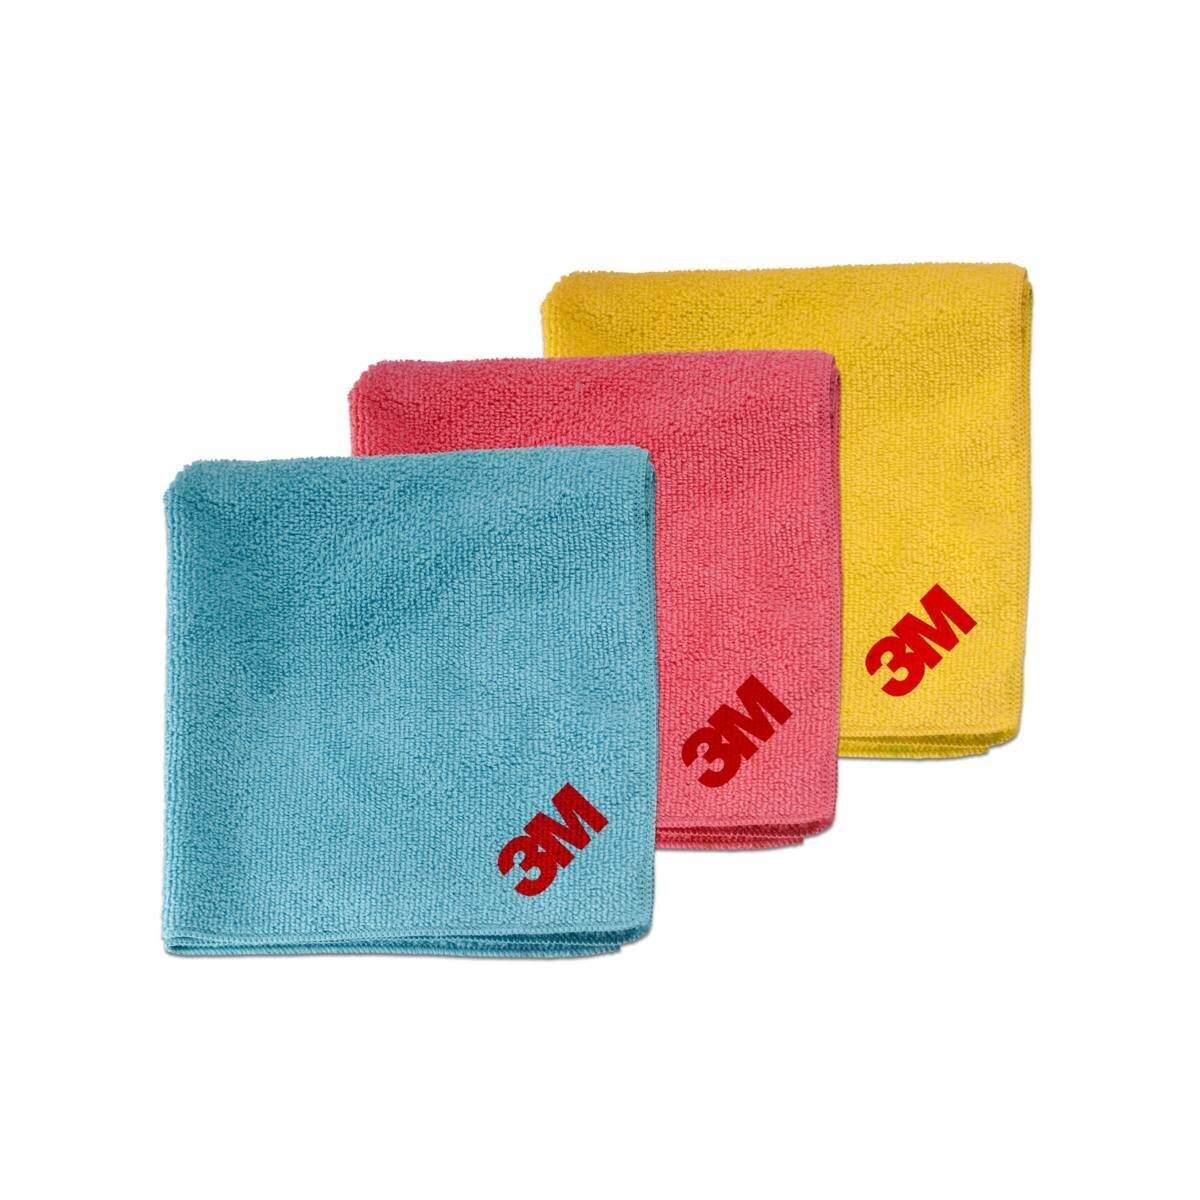 3M Perfect-it III high performance polishing cloth, pink, 36 cm x 32 cm #50489